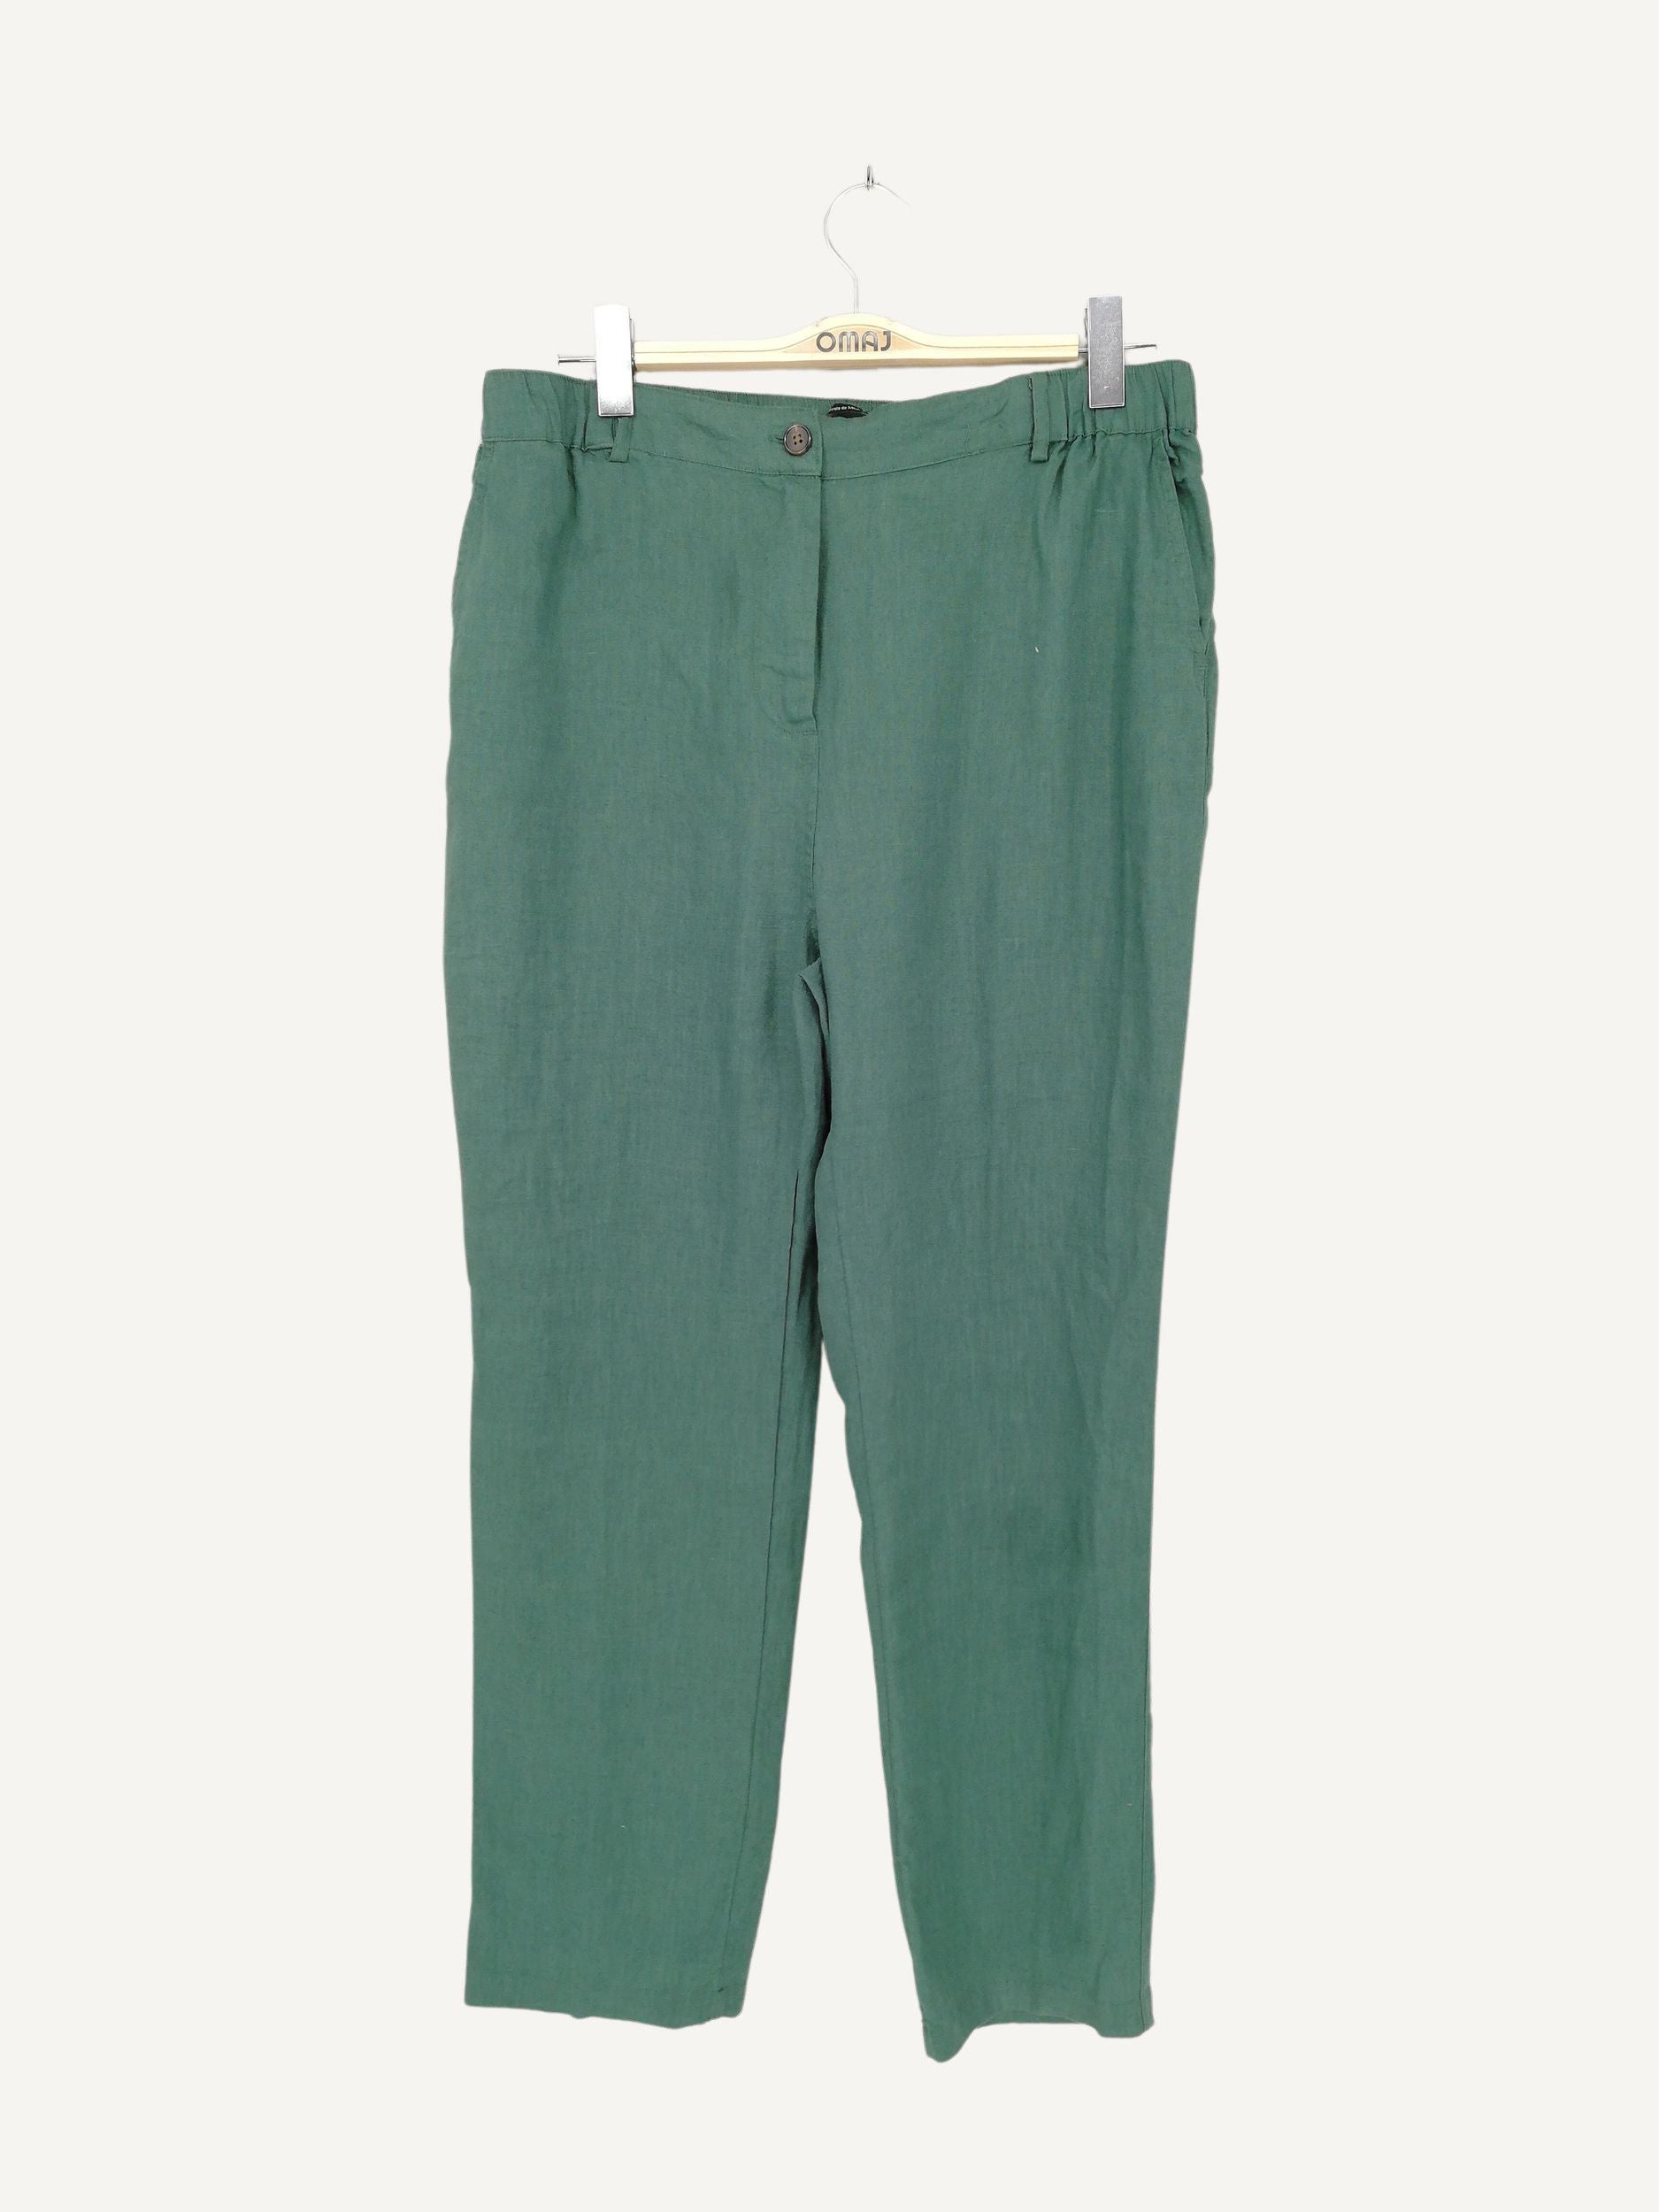 Pantalon chino Jack vert pour Homme I Ollygan - Ollygan